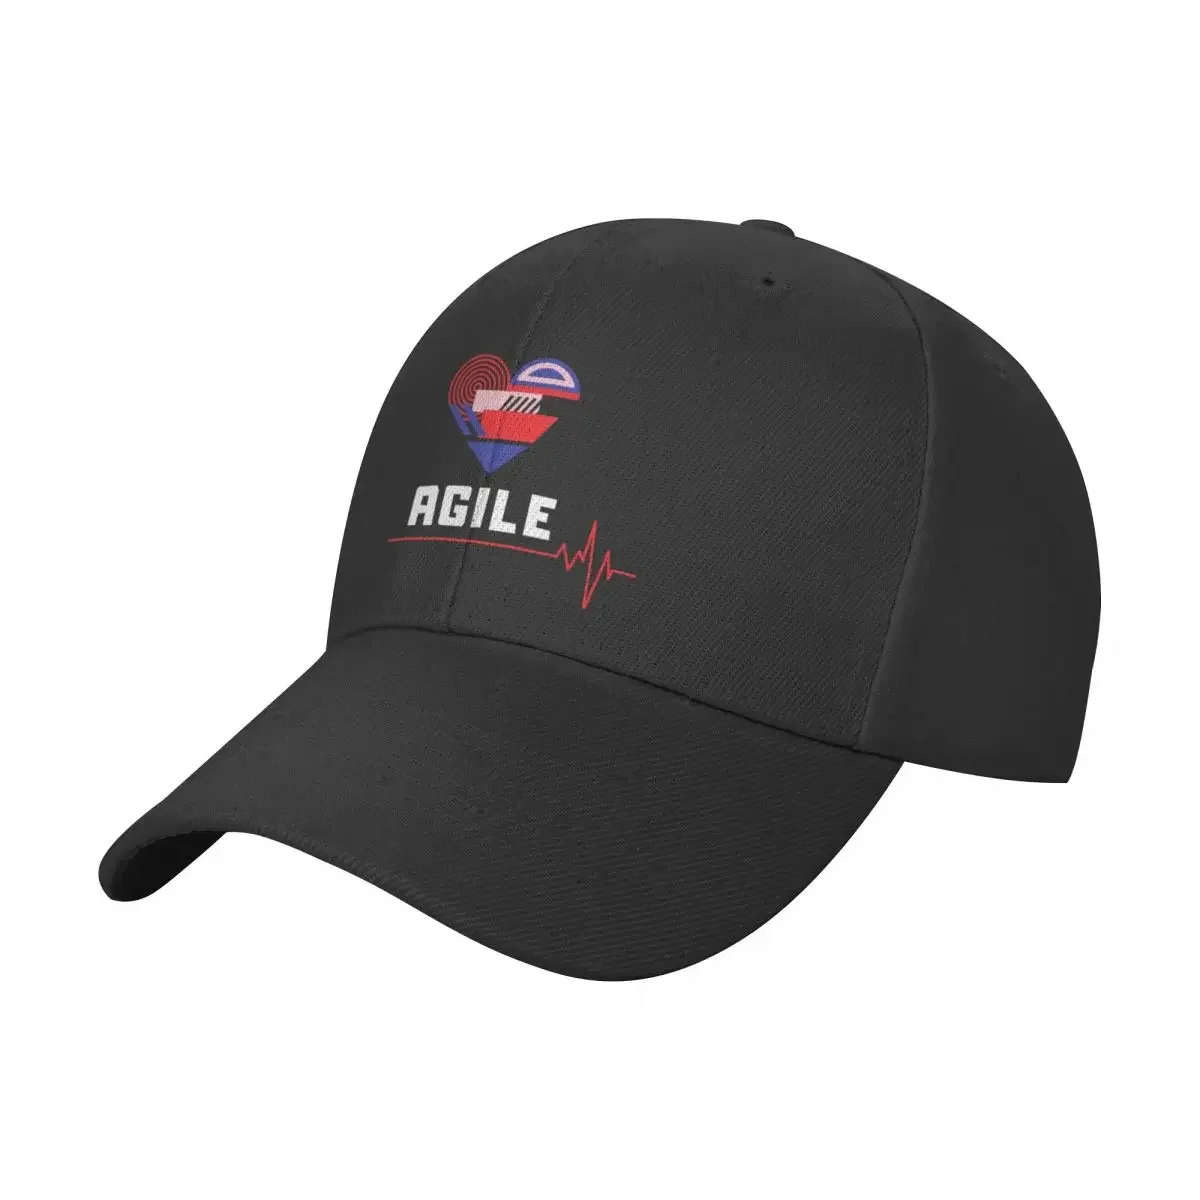 Agile Heart Baseball Cap Designer Hat New In Hat New In The Hat Women's Golf Clothing Men's